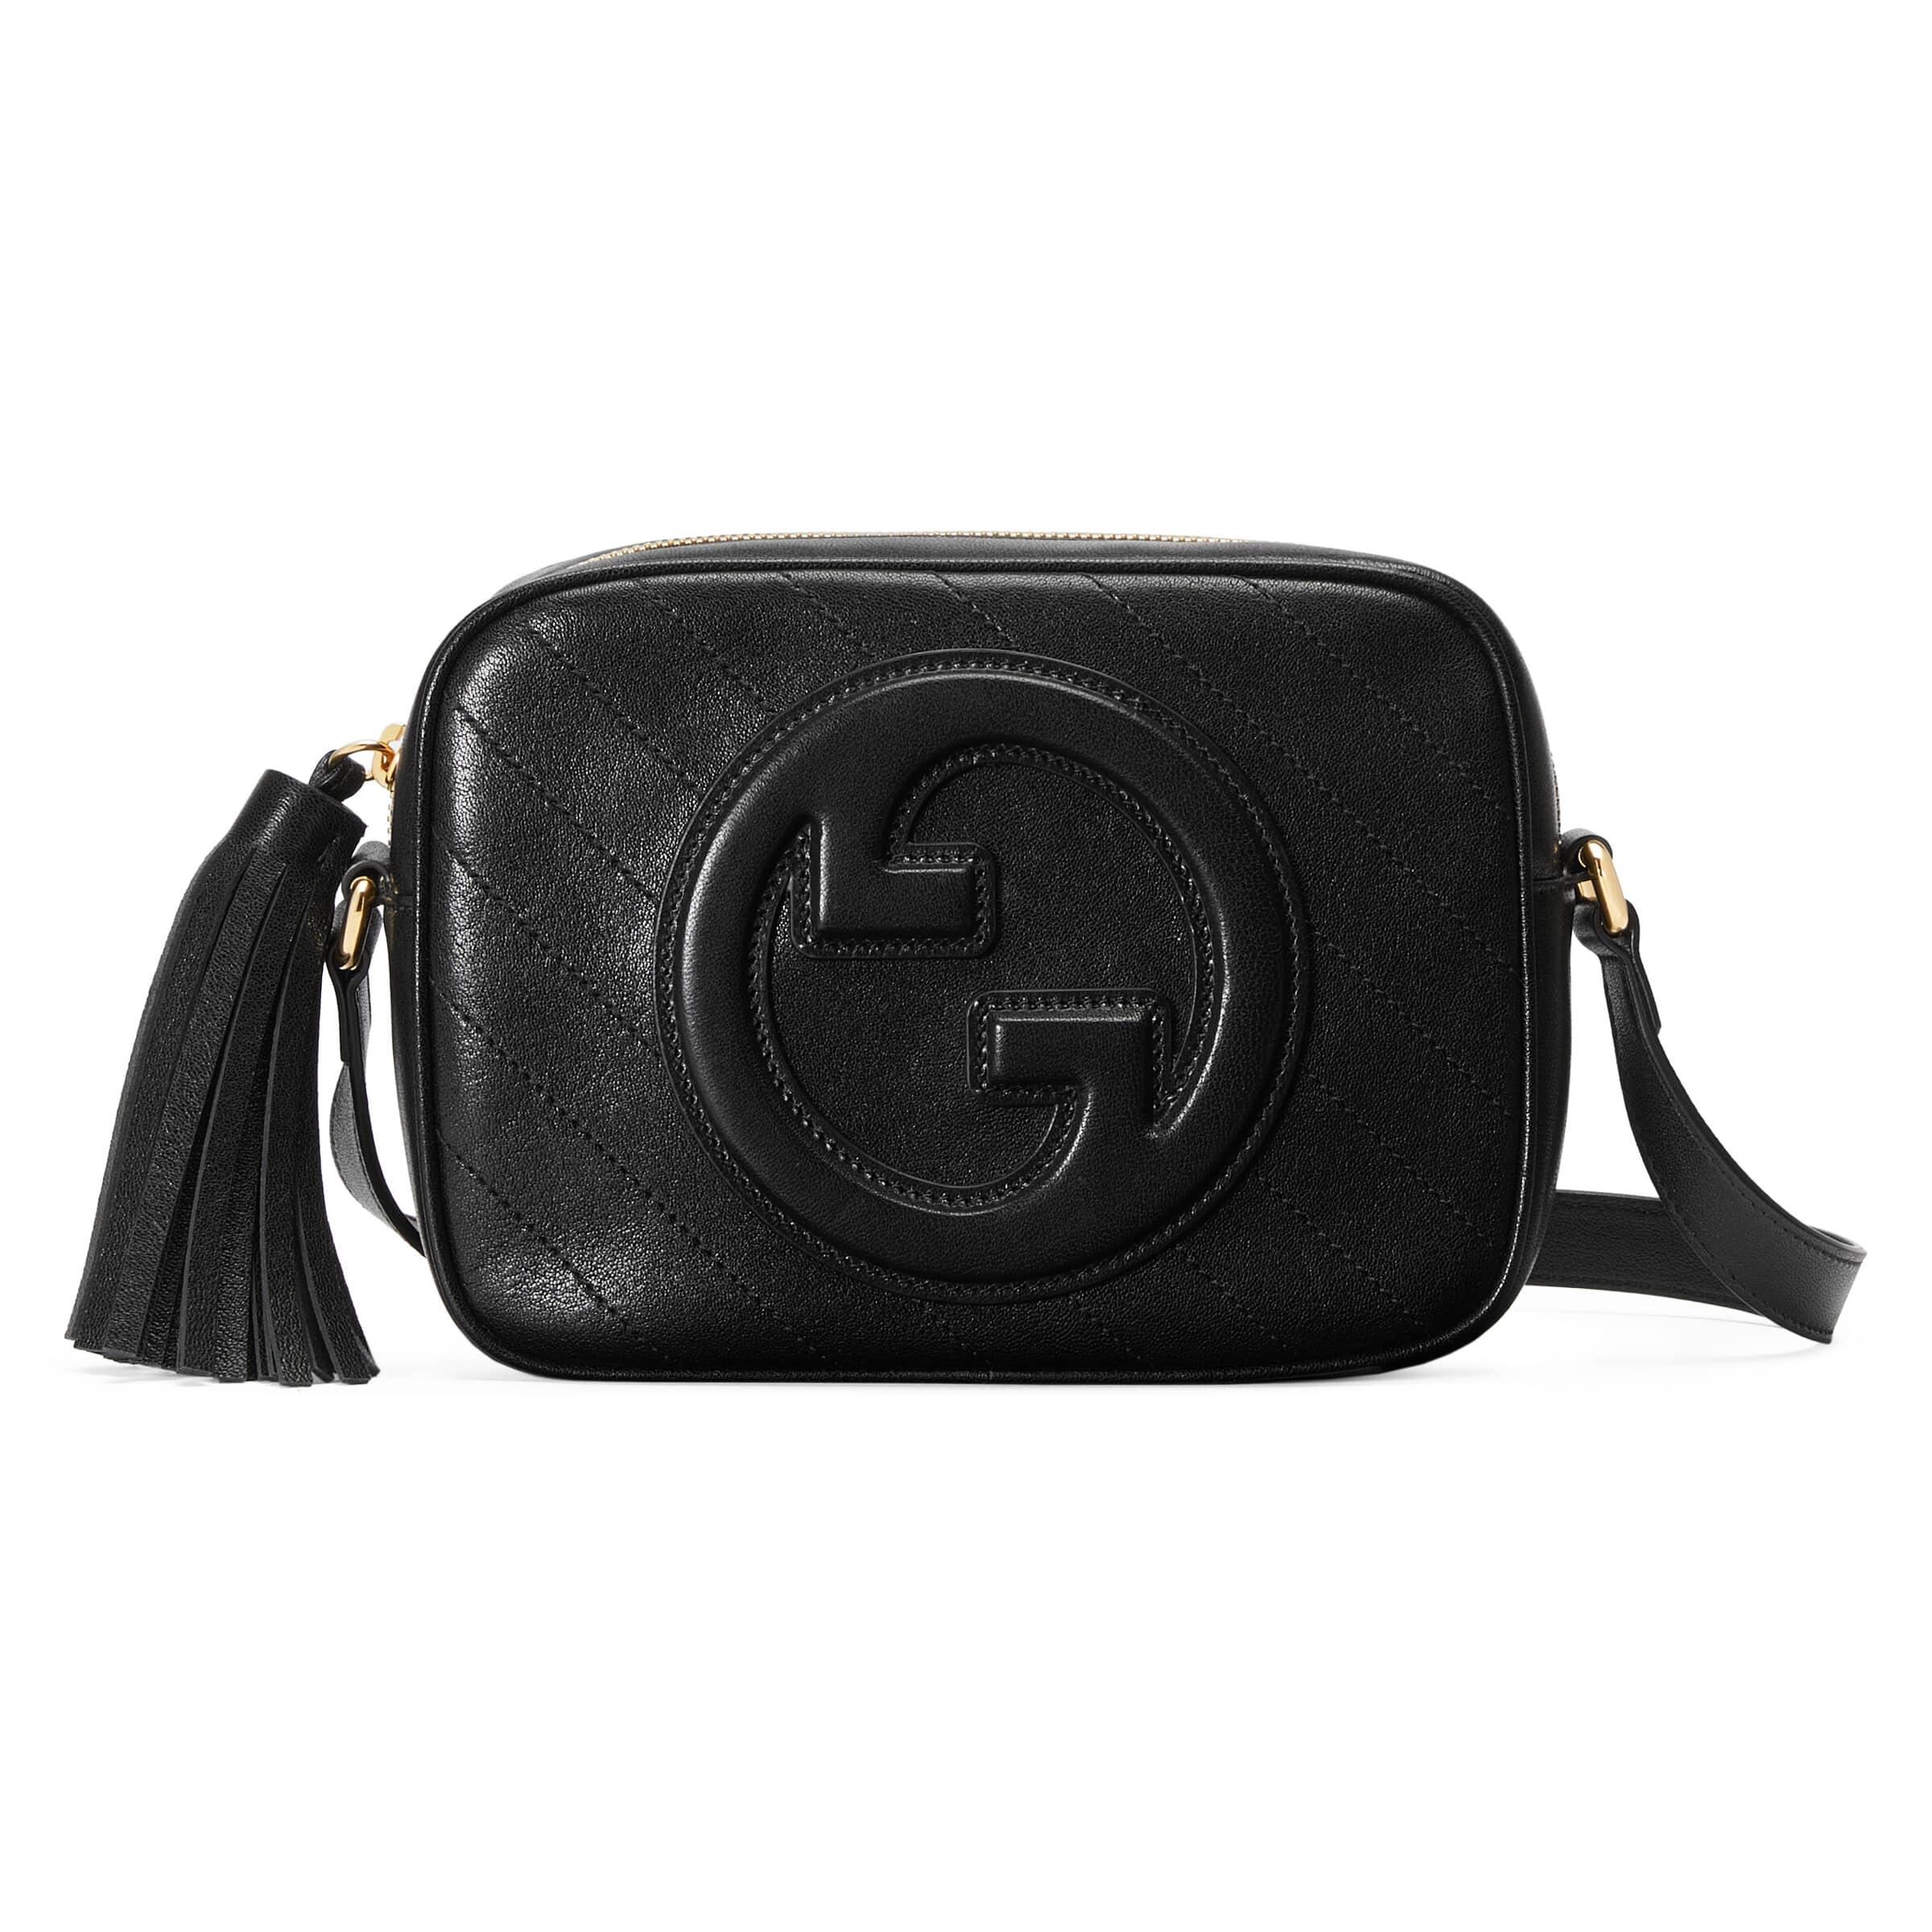 Gucci Blondie Small Shoulder Bag in Black | Lyst